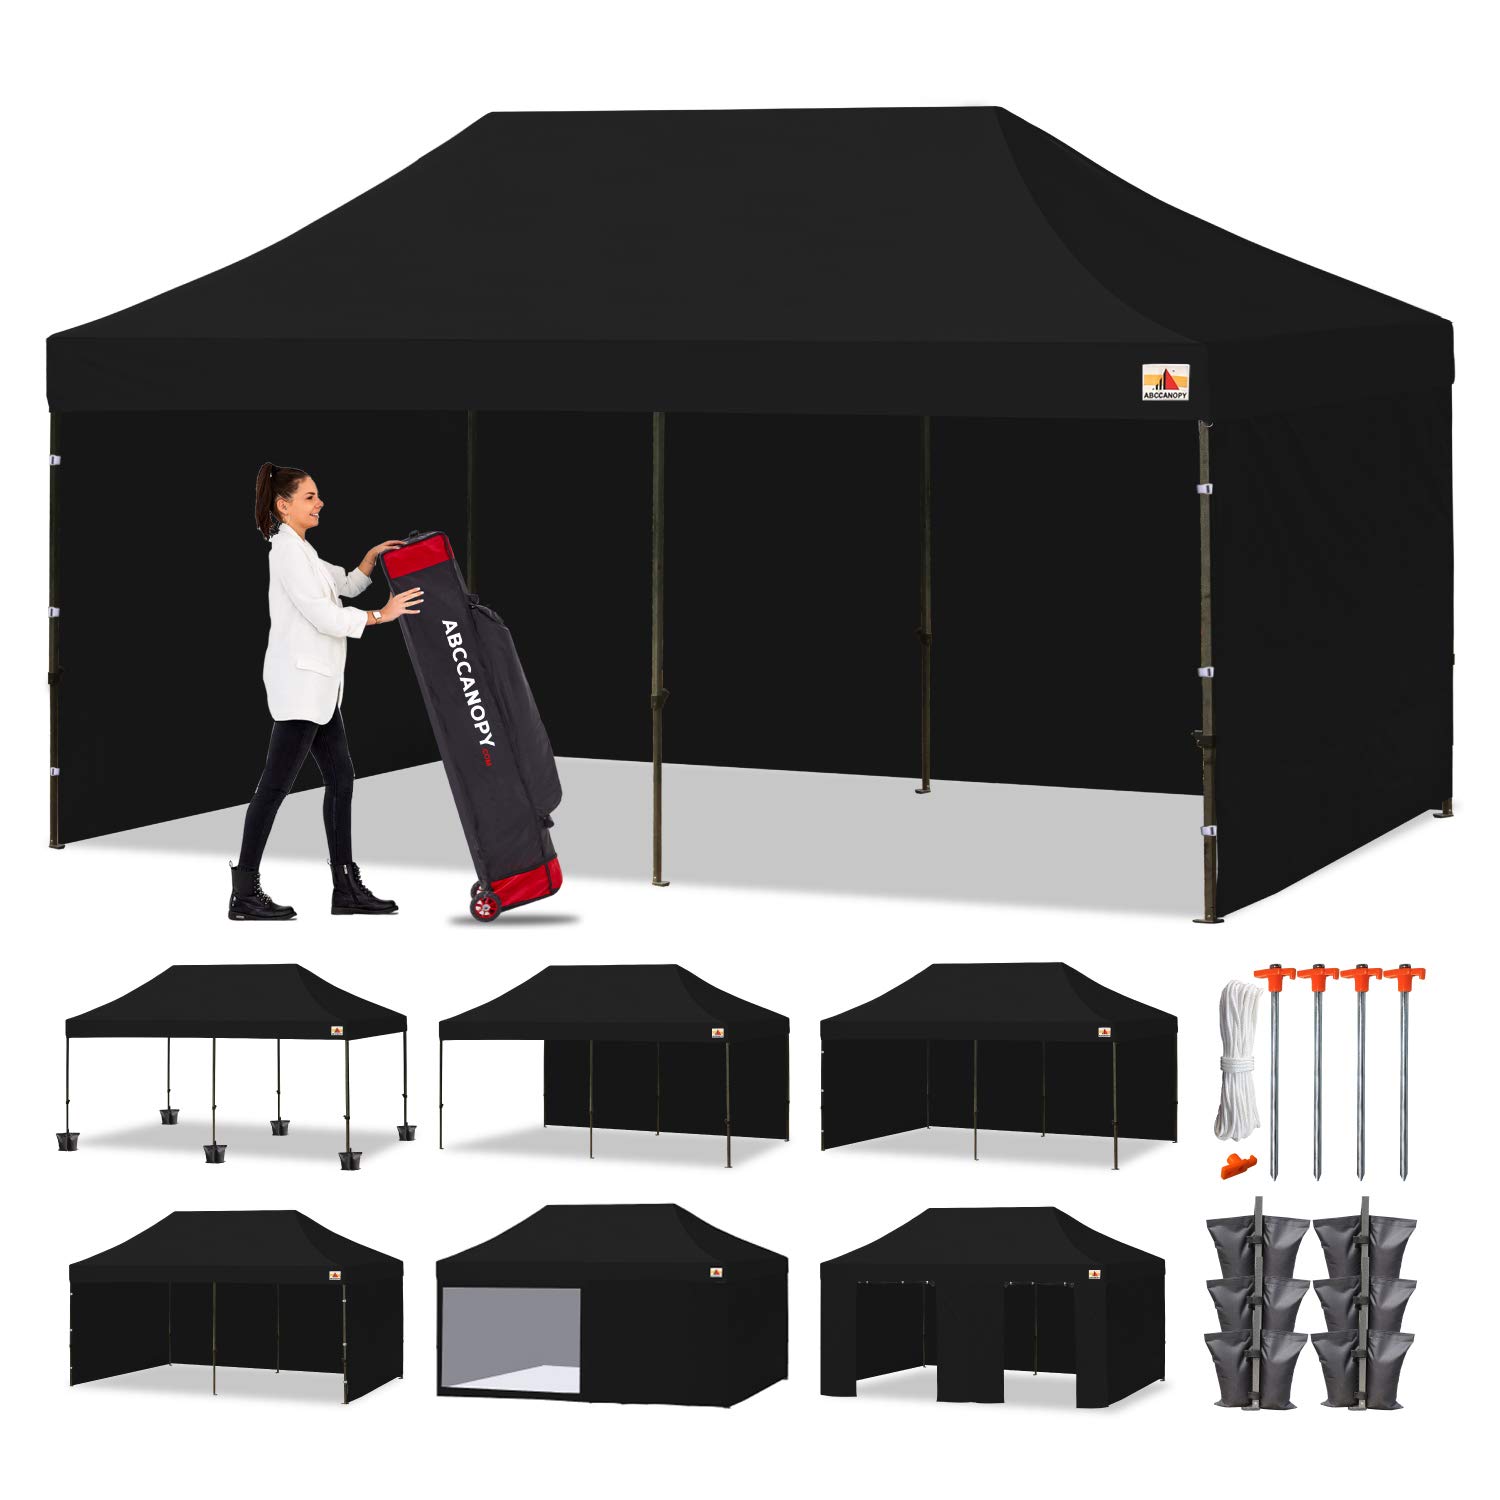 Abccanopy Heavy Duty Ez Pop Up Canopy Tent With Sidewalls 10X20, Black